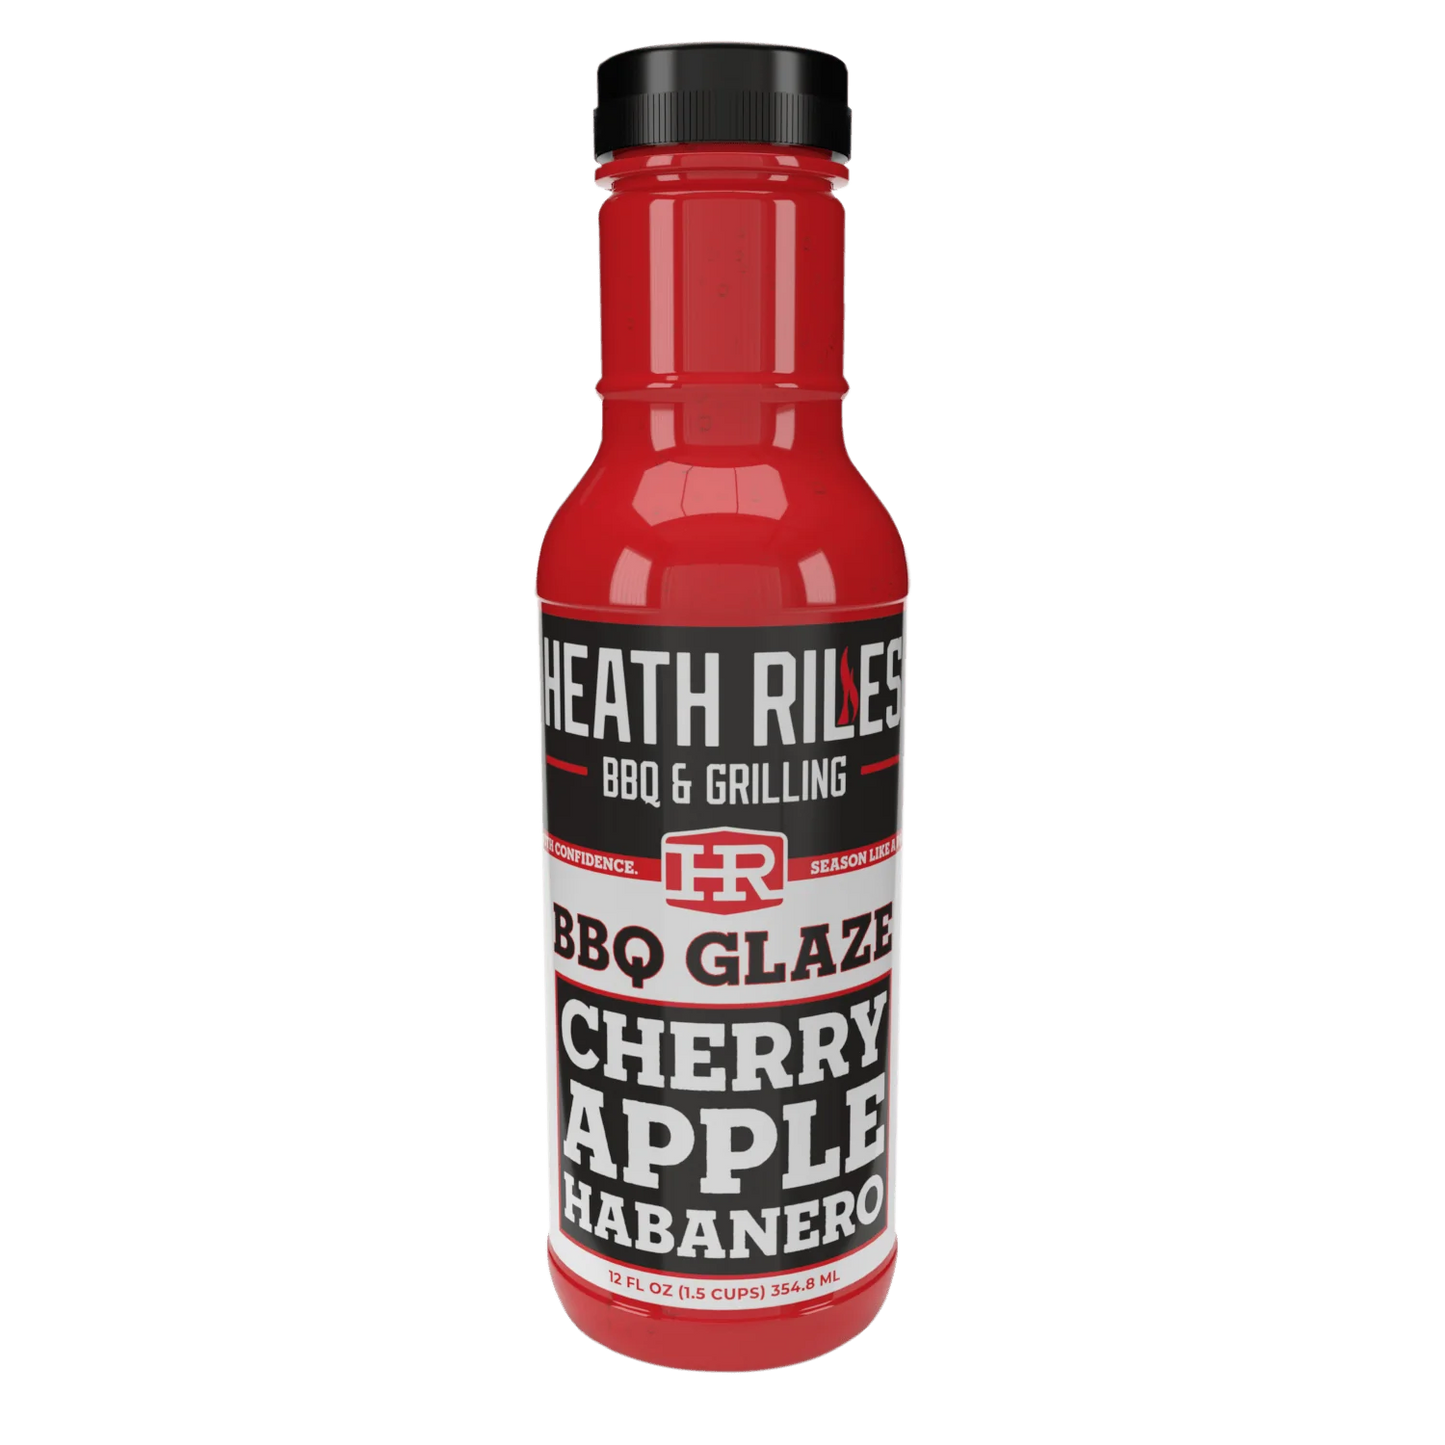 Heath Riles Cherry Apple Habanero BBQ Glaze